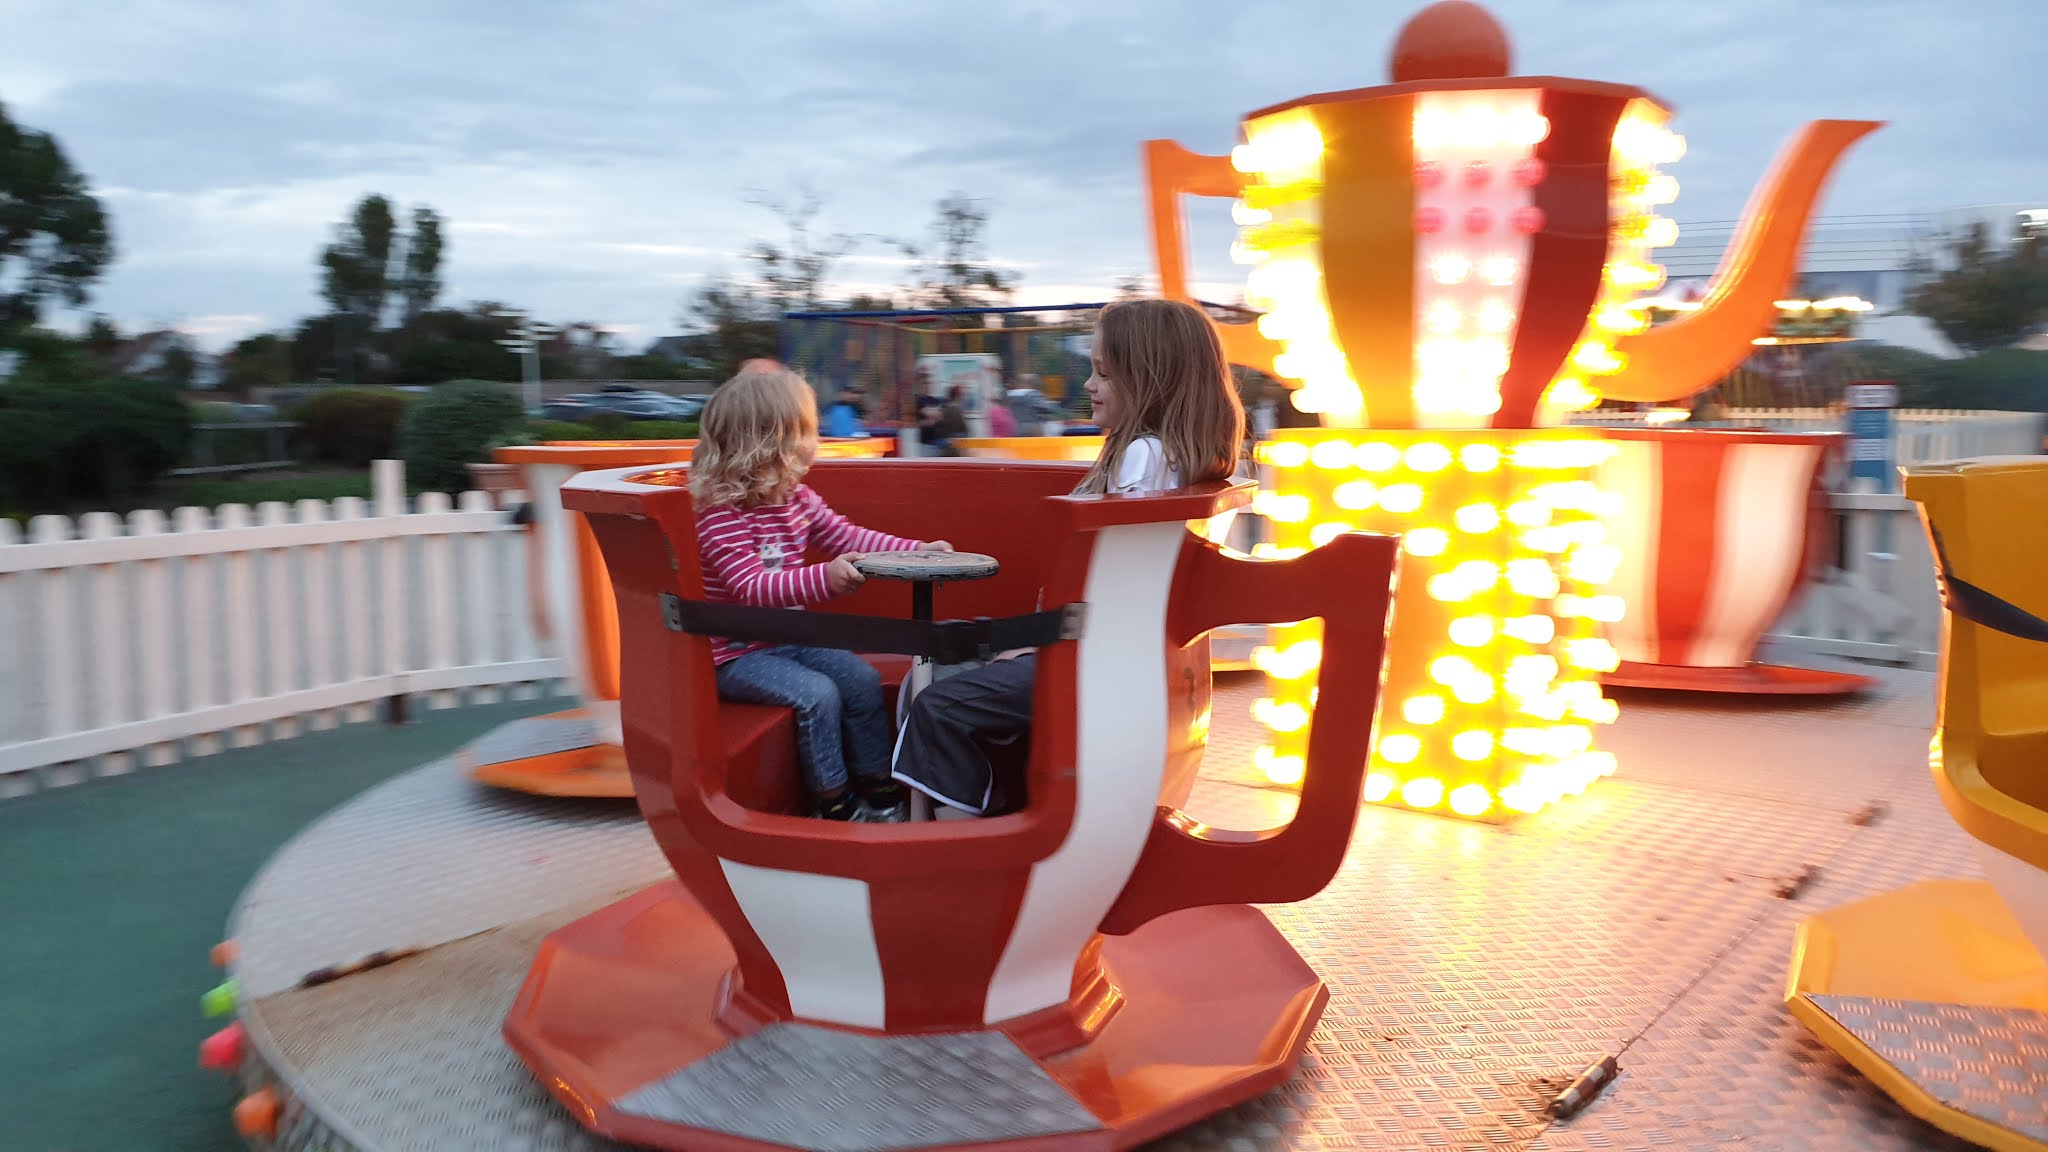 kids in a teacup fairground ride